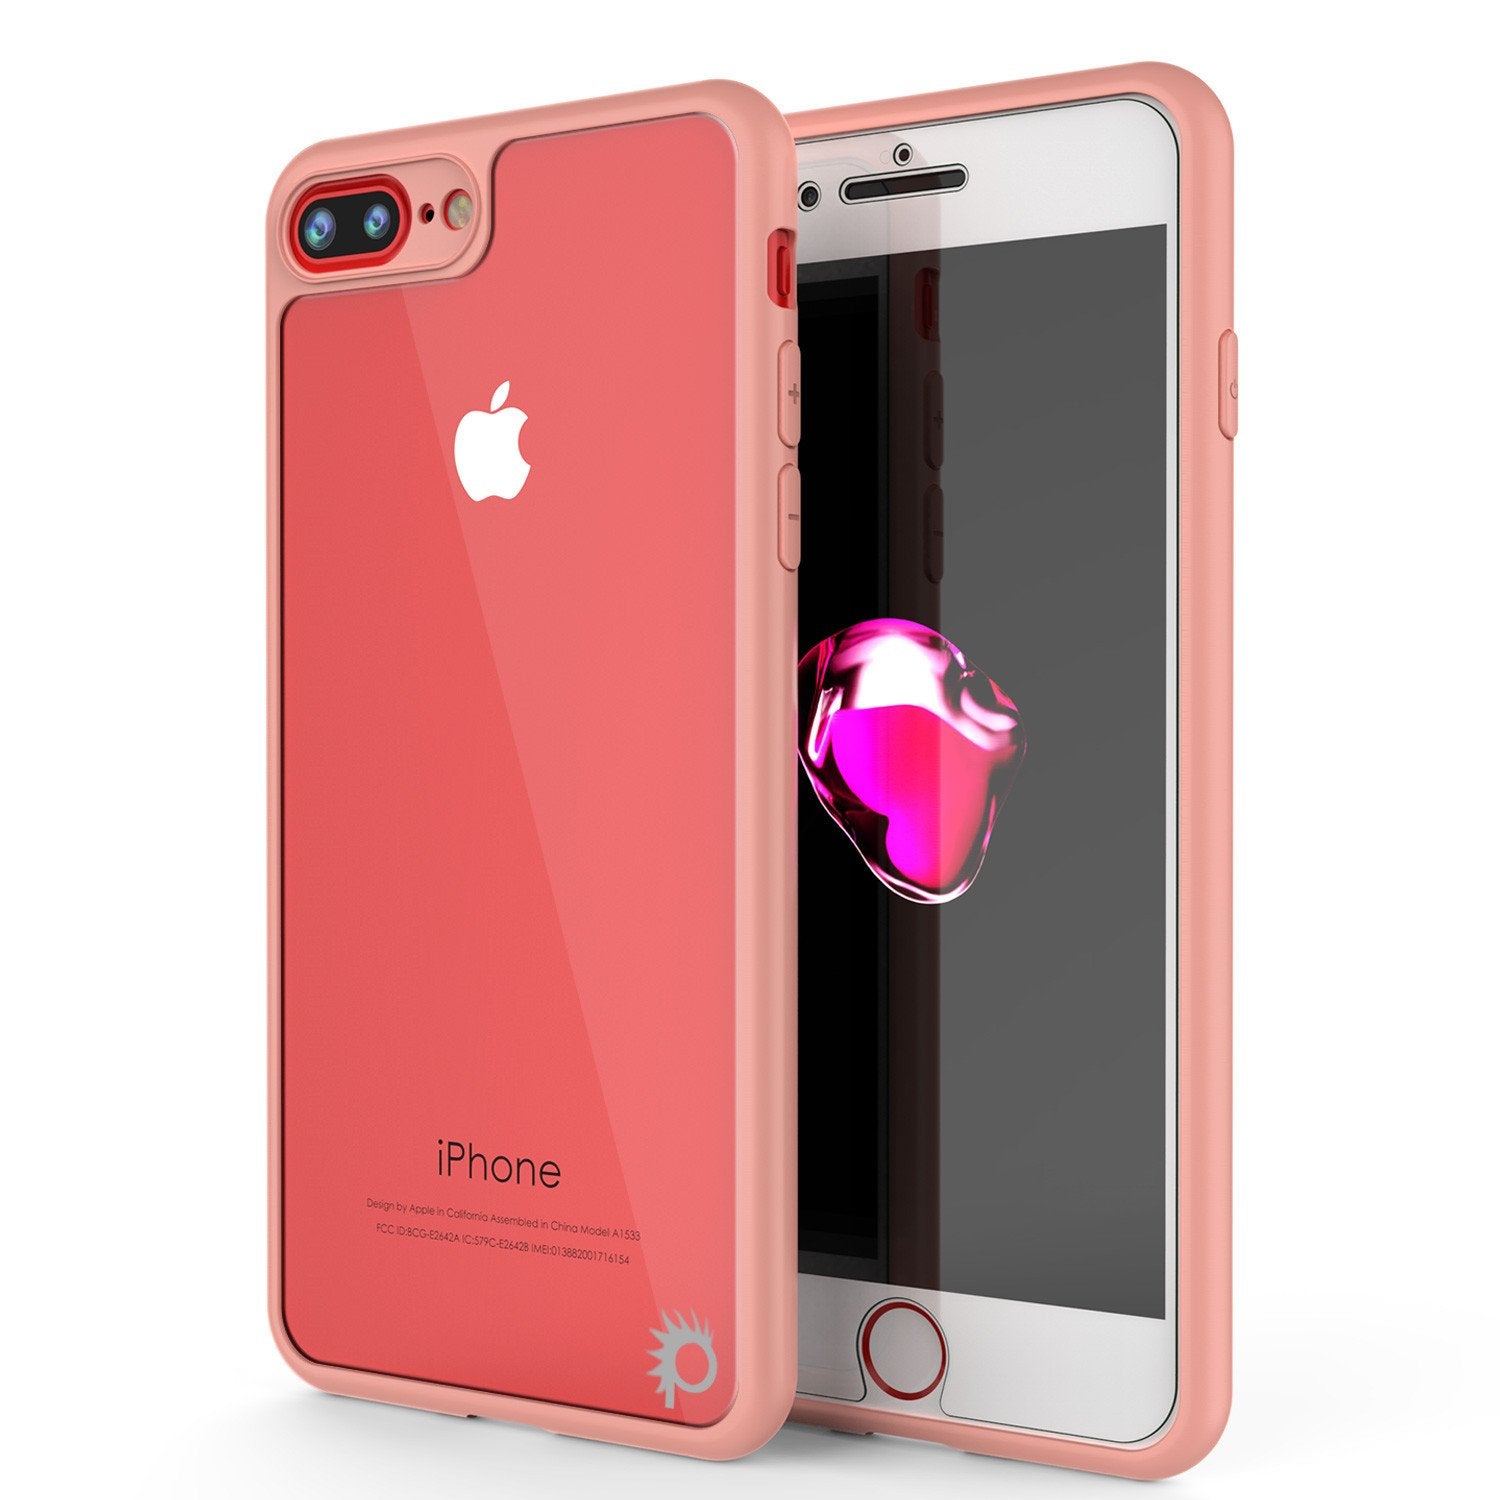 İphone 8 plus , iphone x , iphone 8 #case #iphone8plus #iphone8 #iphonex  #pinksand #original #cases